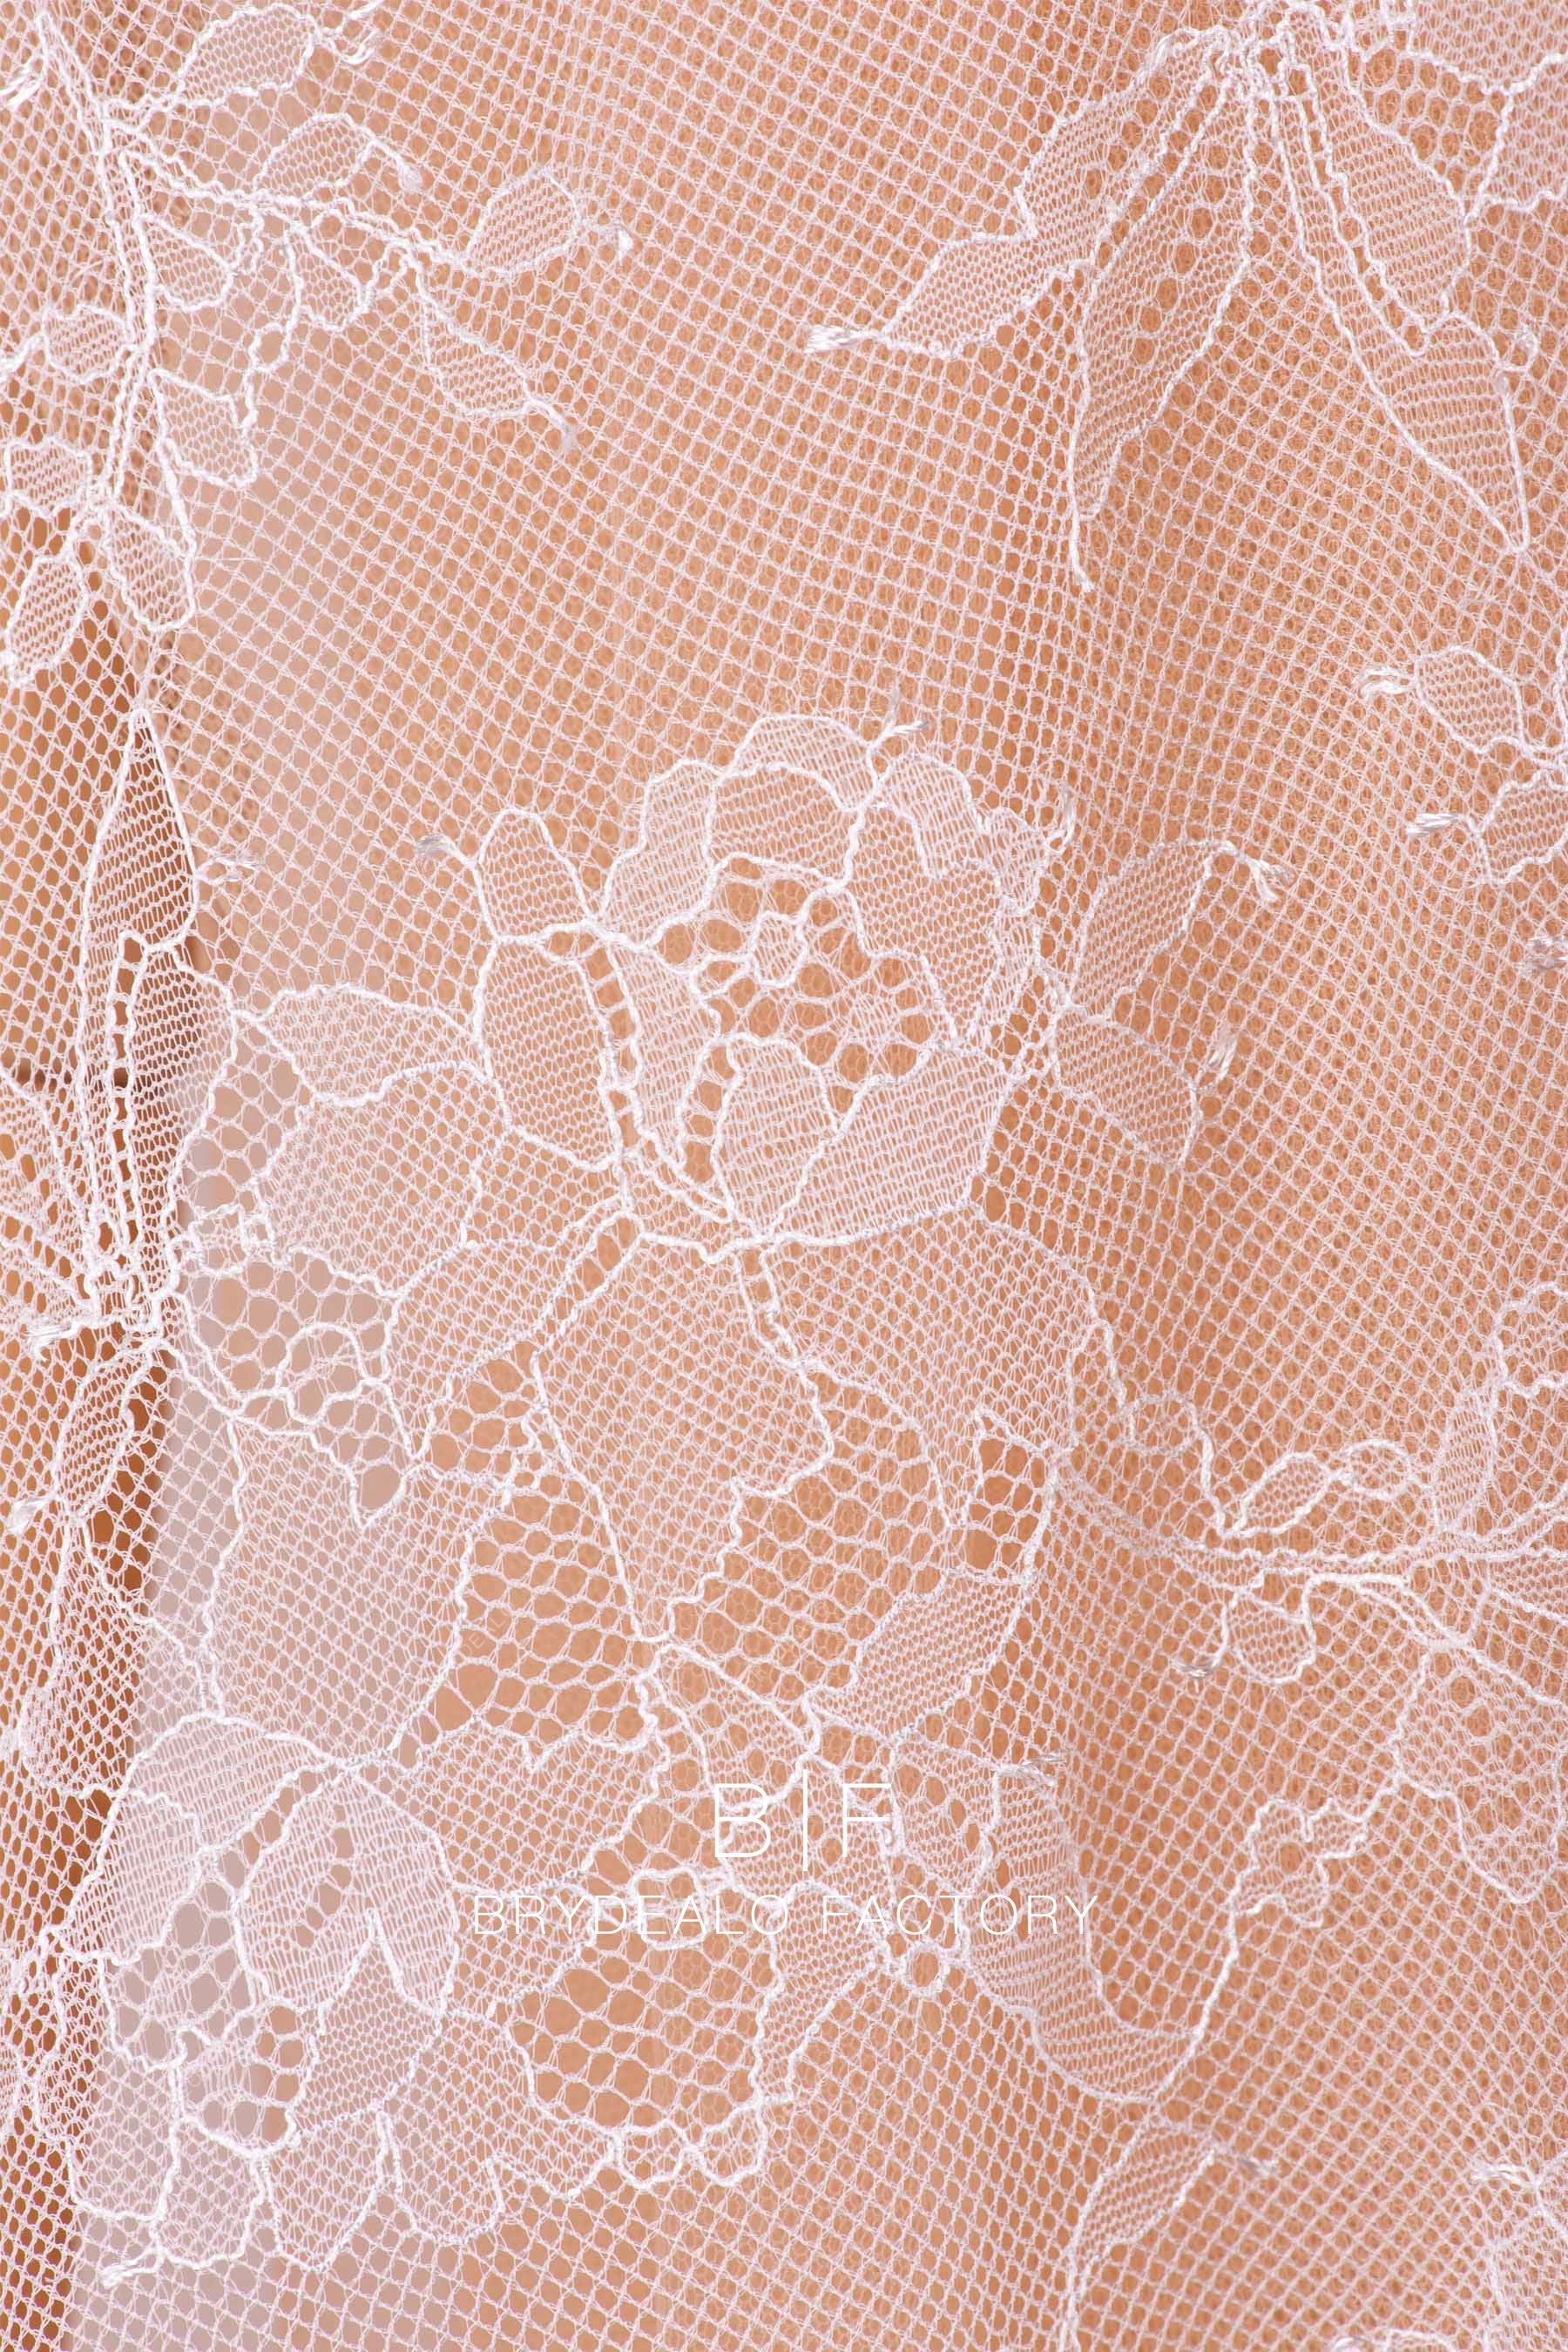 best delicate flower motif chantilly lace